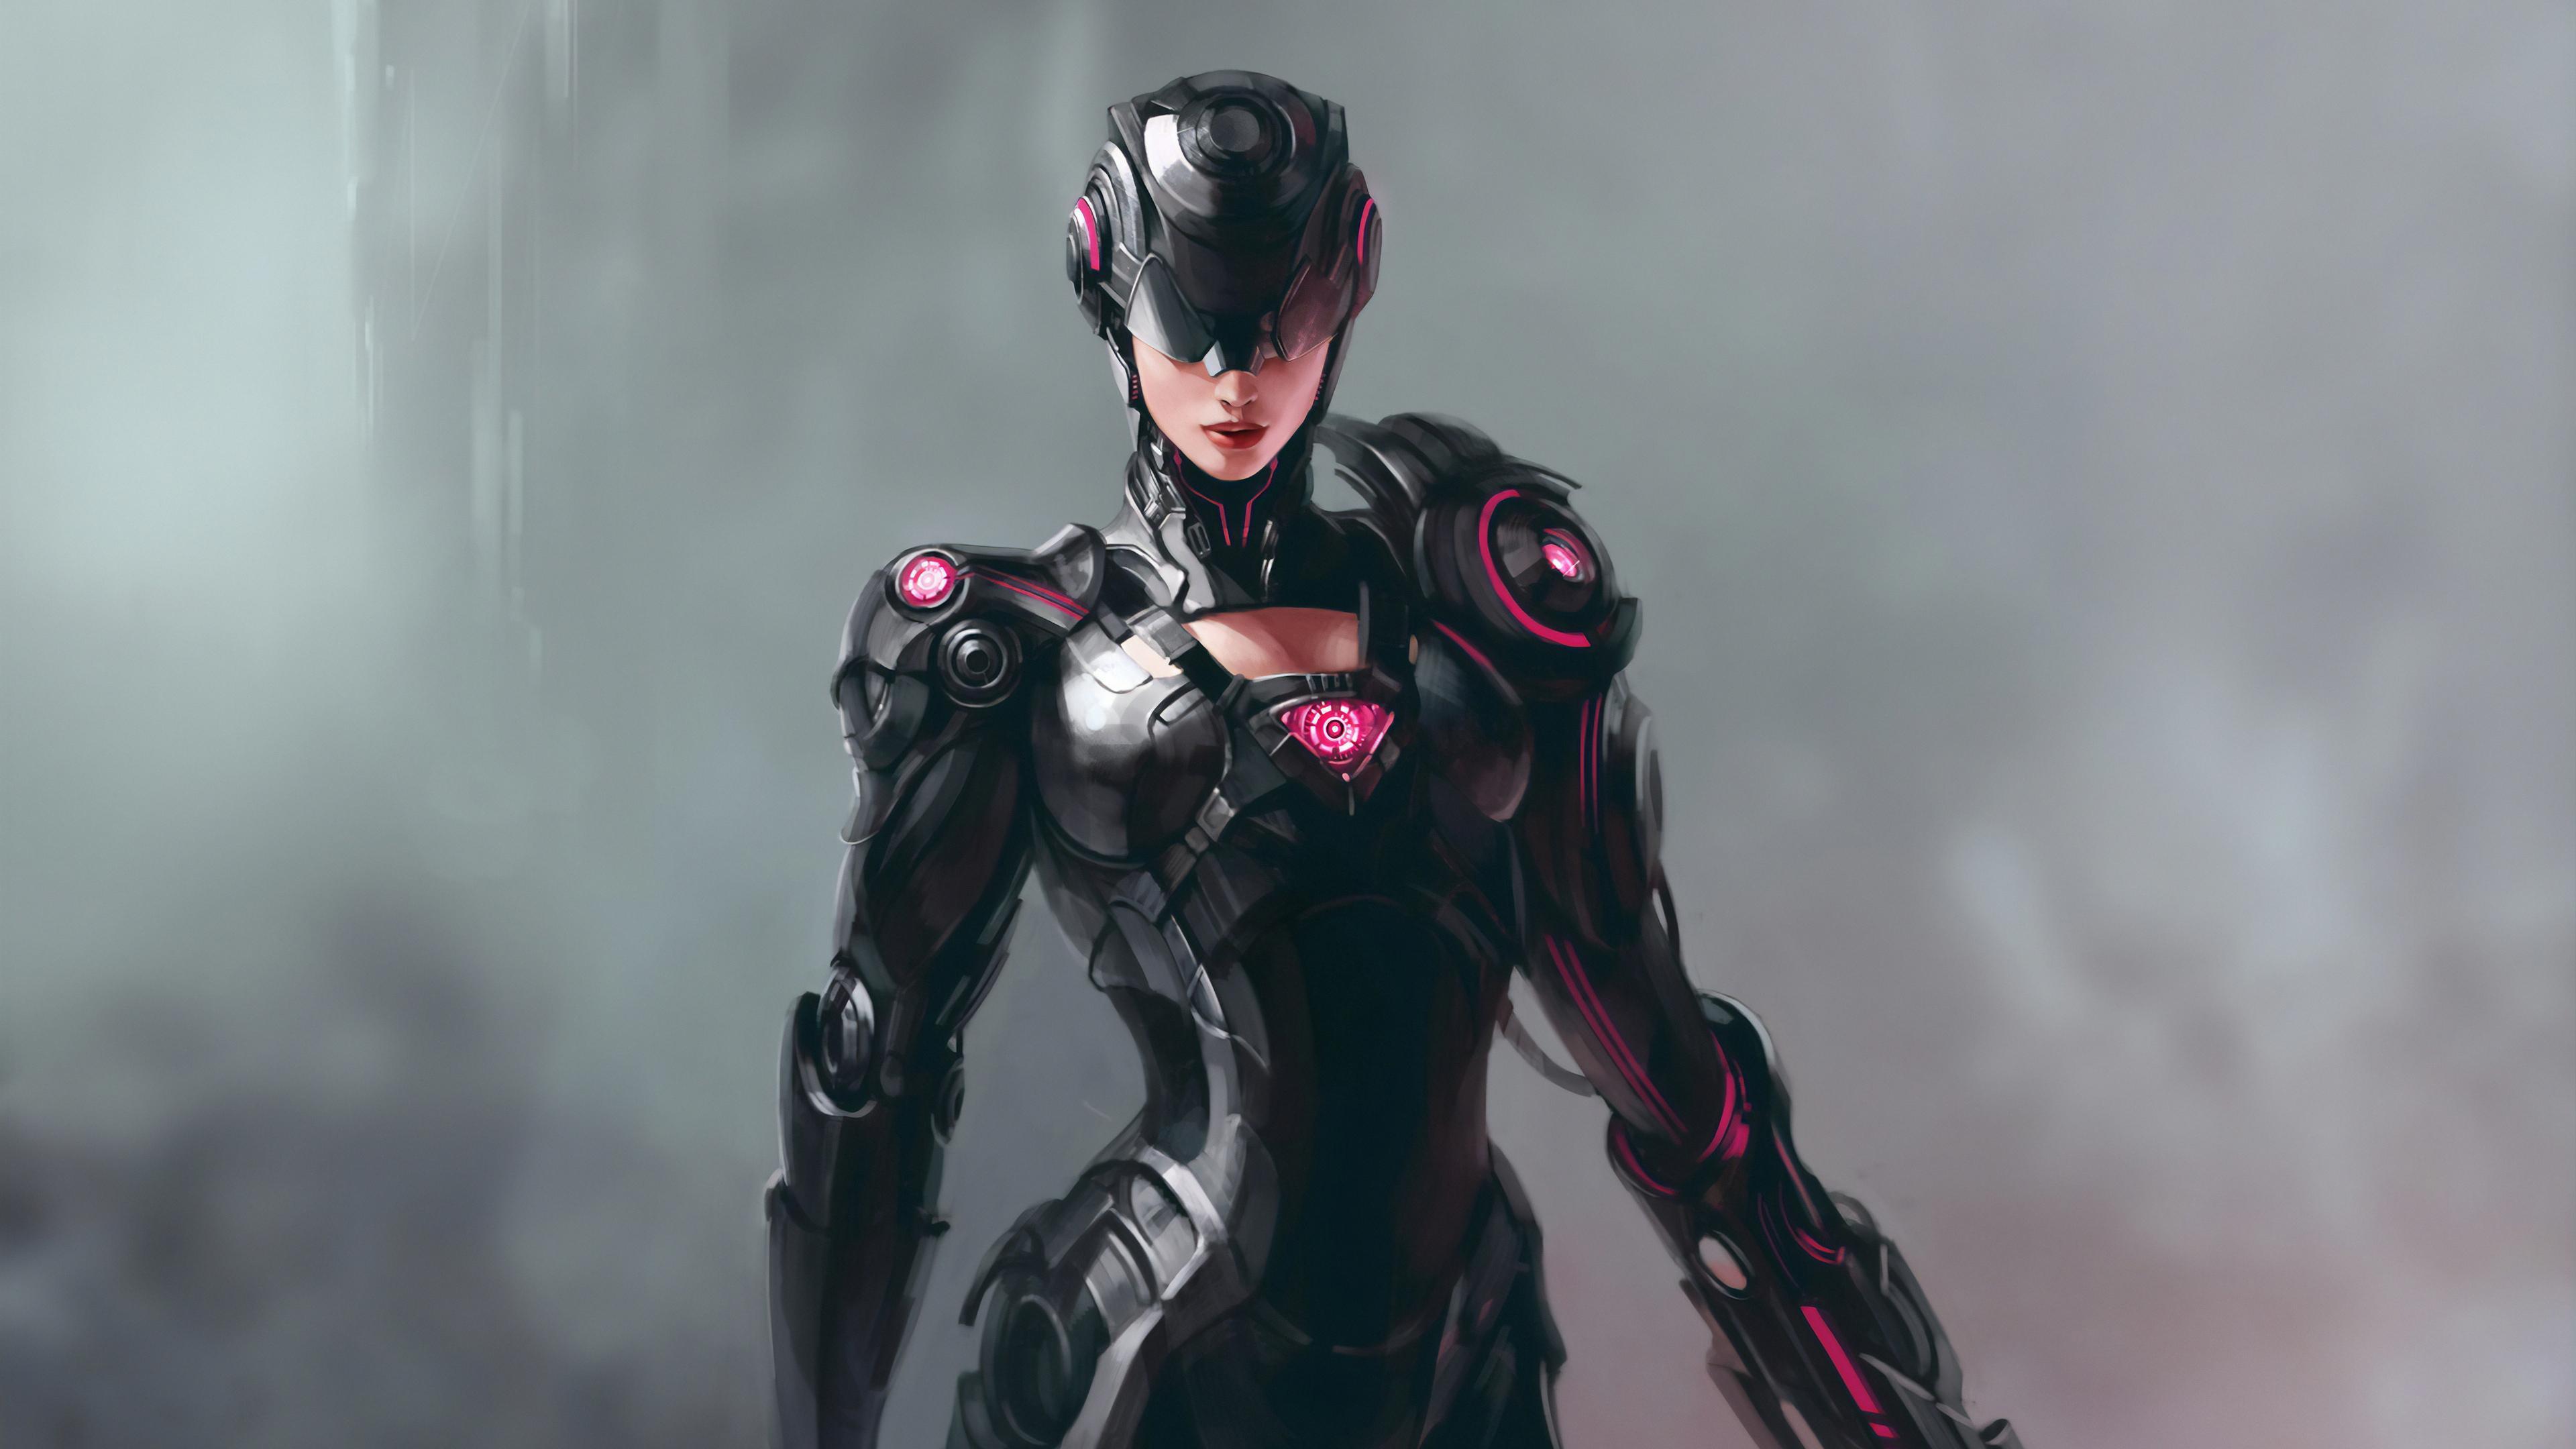 Cyborg Girl, HD Artist, 4k Wallpaper, Image, Background